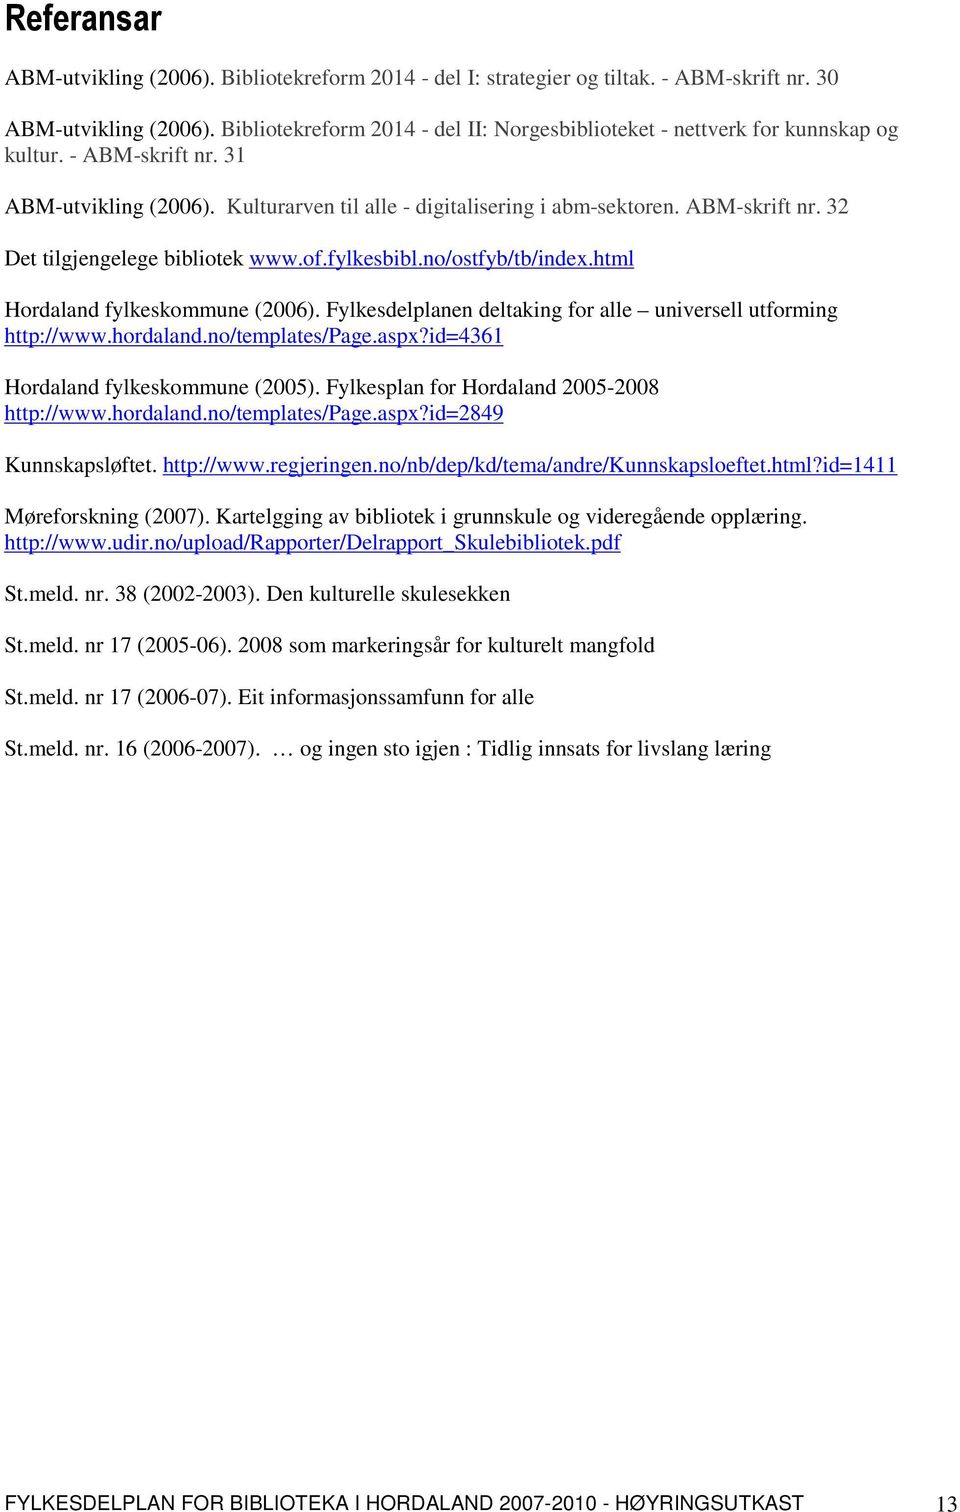 of.fylkesbibl.no/ostfyb/tb/index.html Hordaland fylkeskommune (2006). Fylkesdelplanen deltaking for alle universell utforming http://www.hordaland.no/templates/page.aspx?